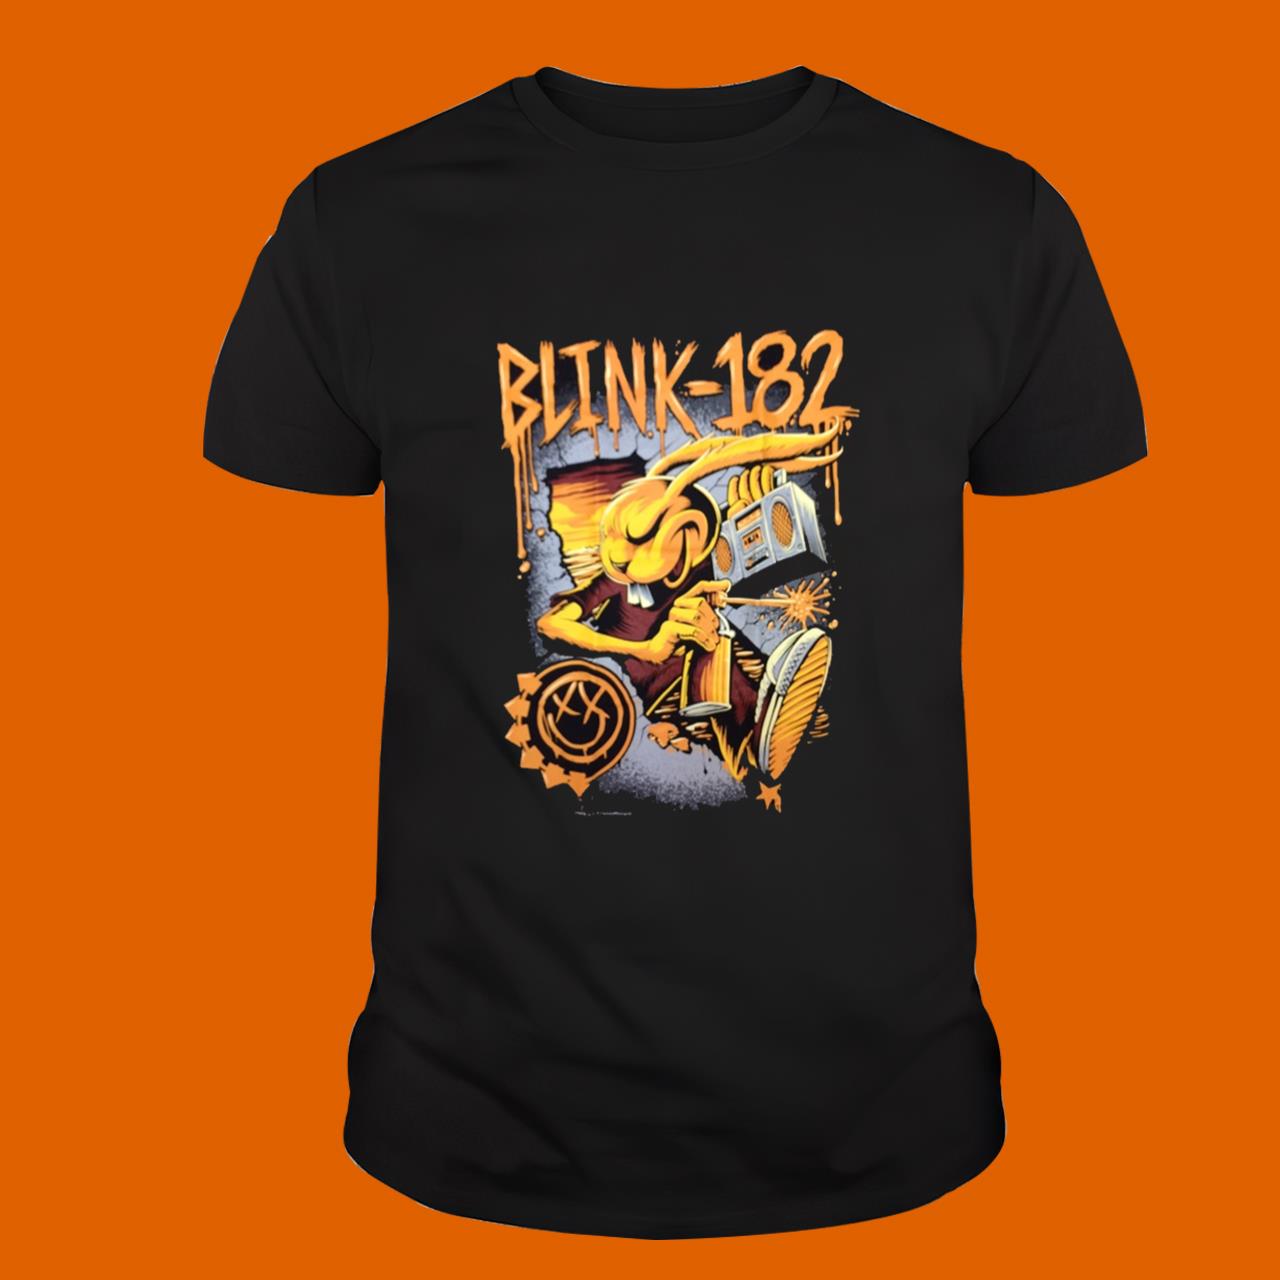 Rock Band Blink 182 Black Shirts